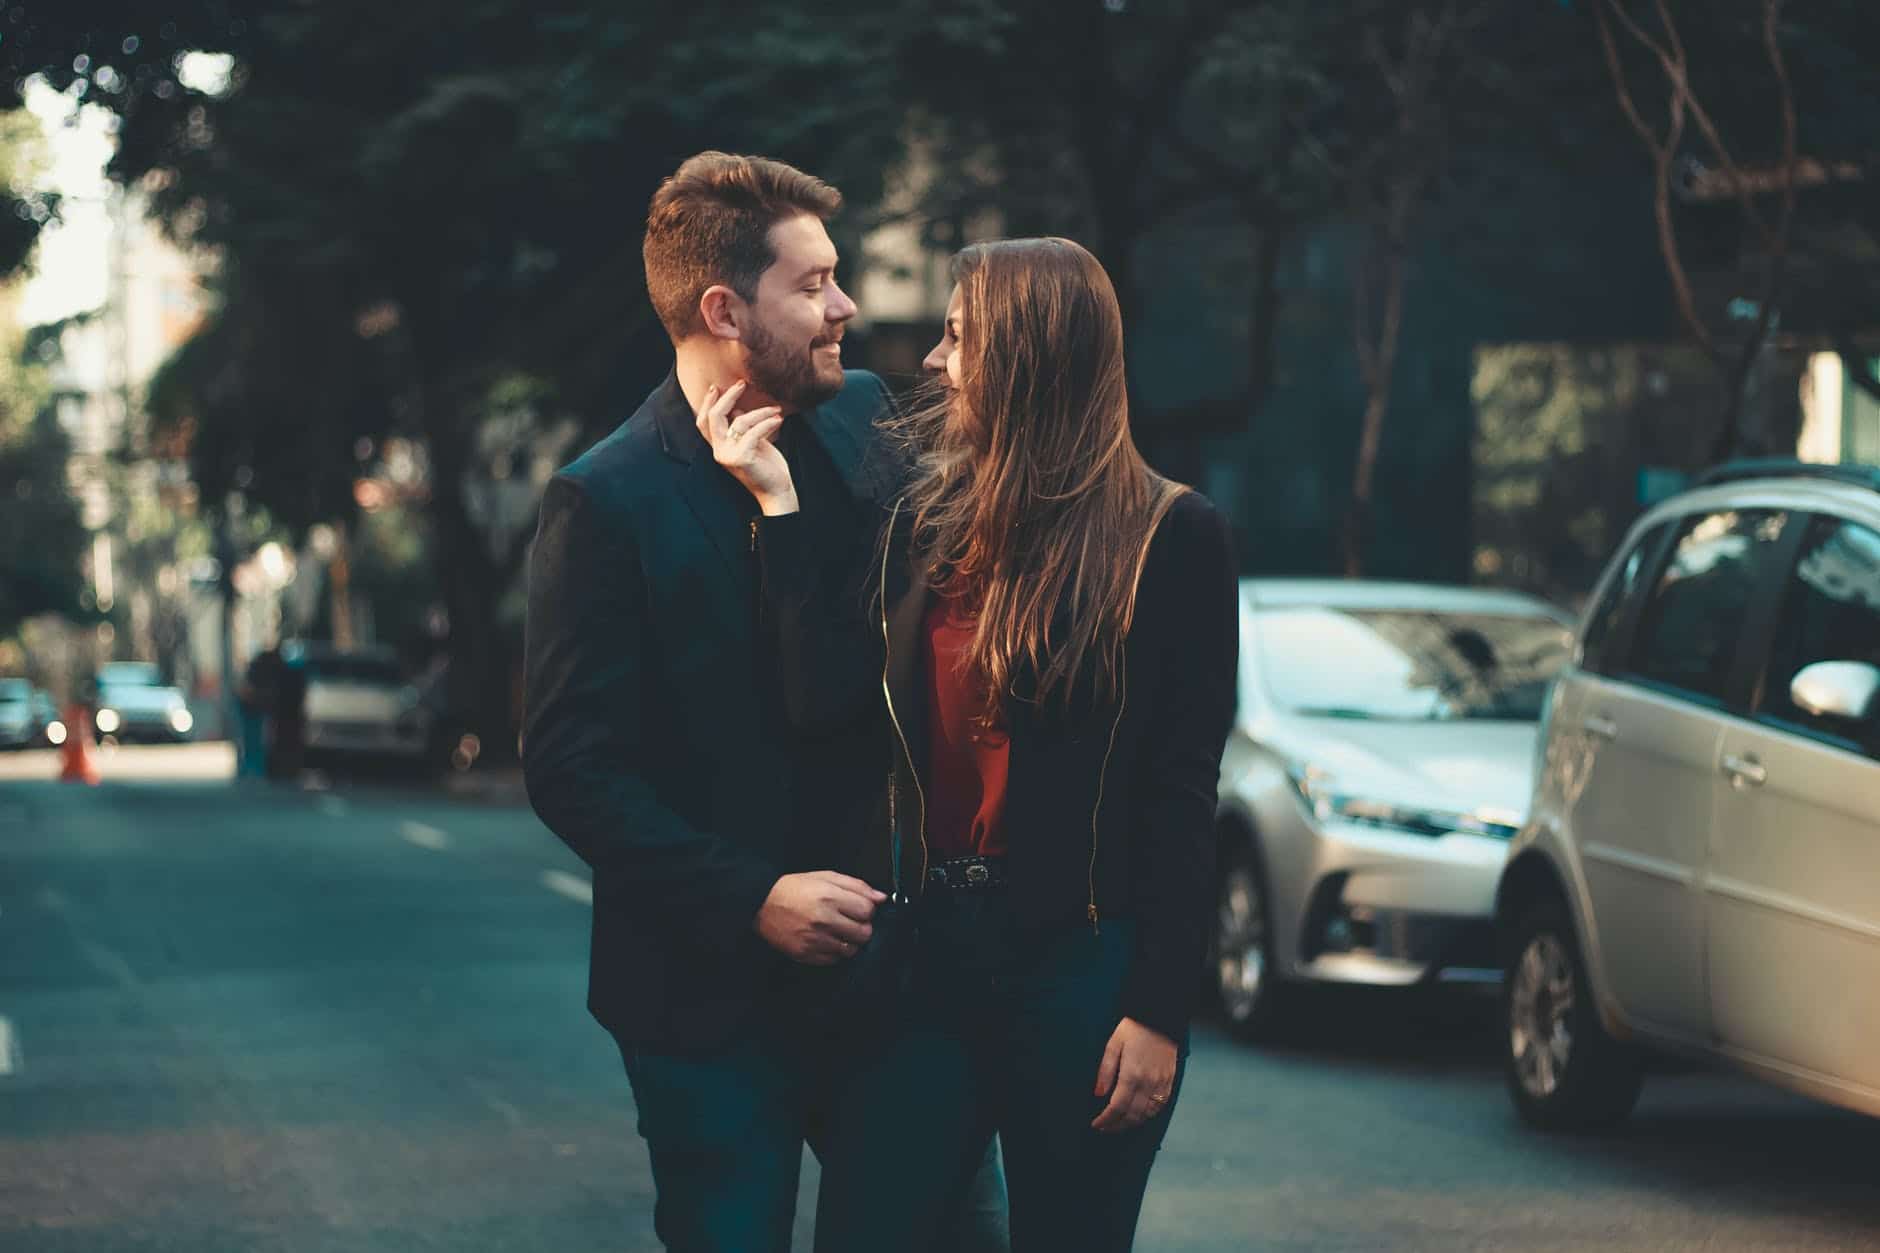 romantic young couple bonding on street